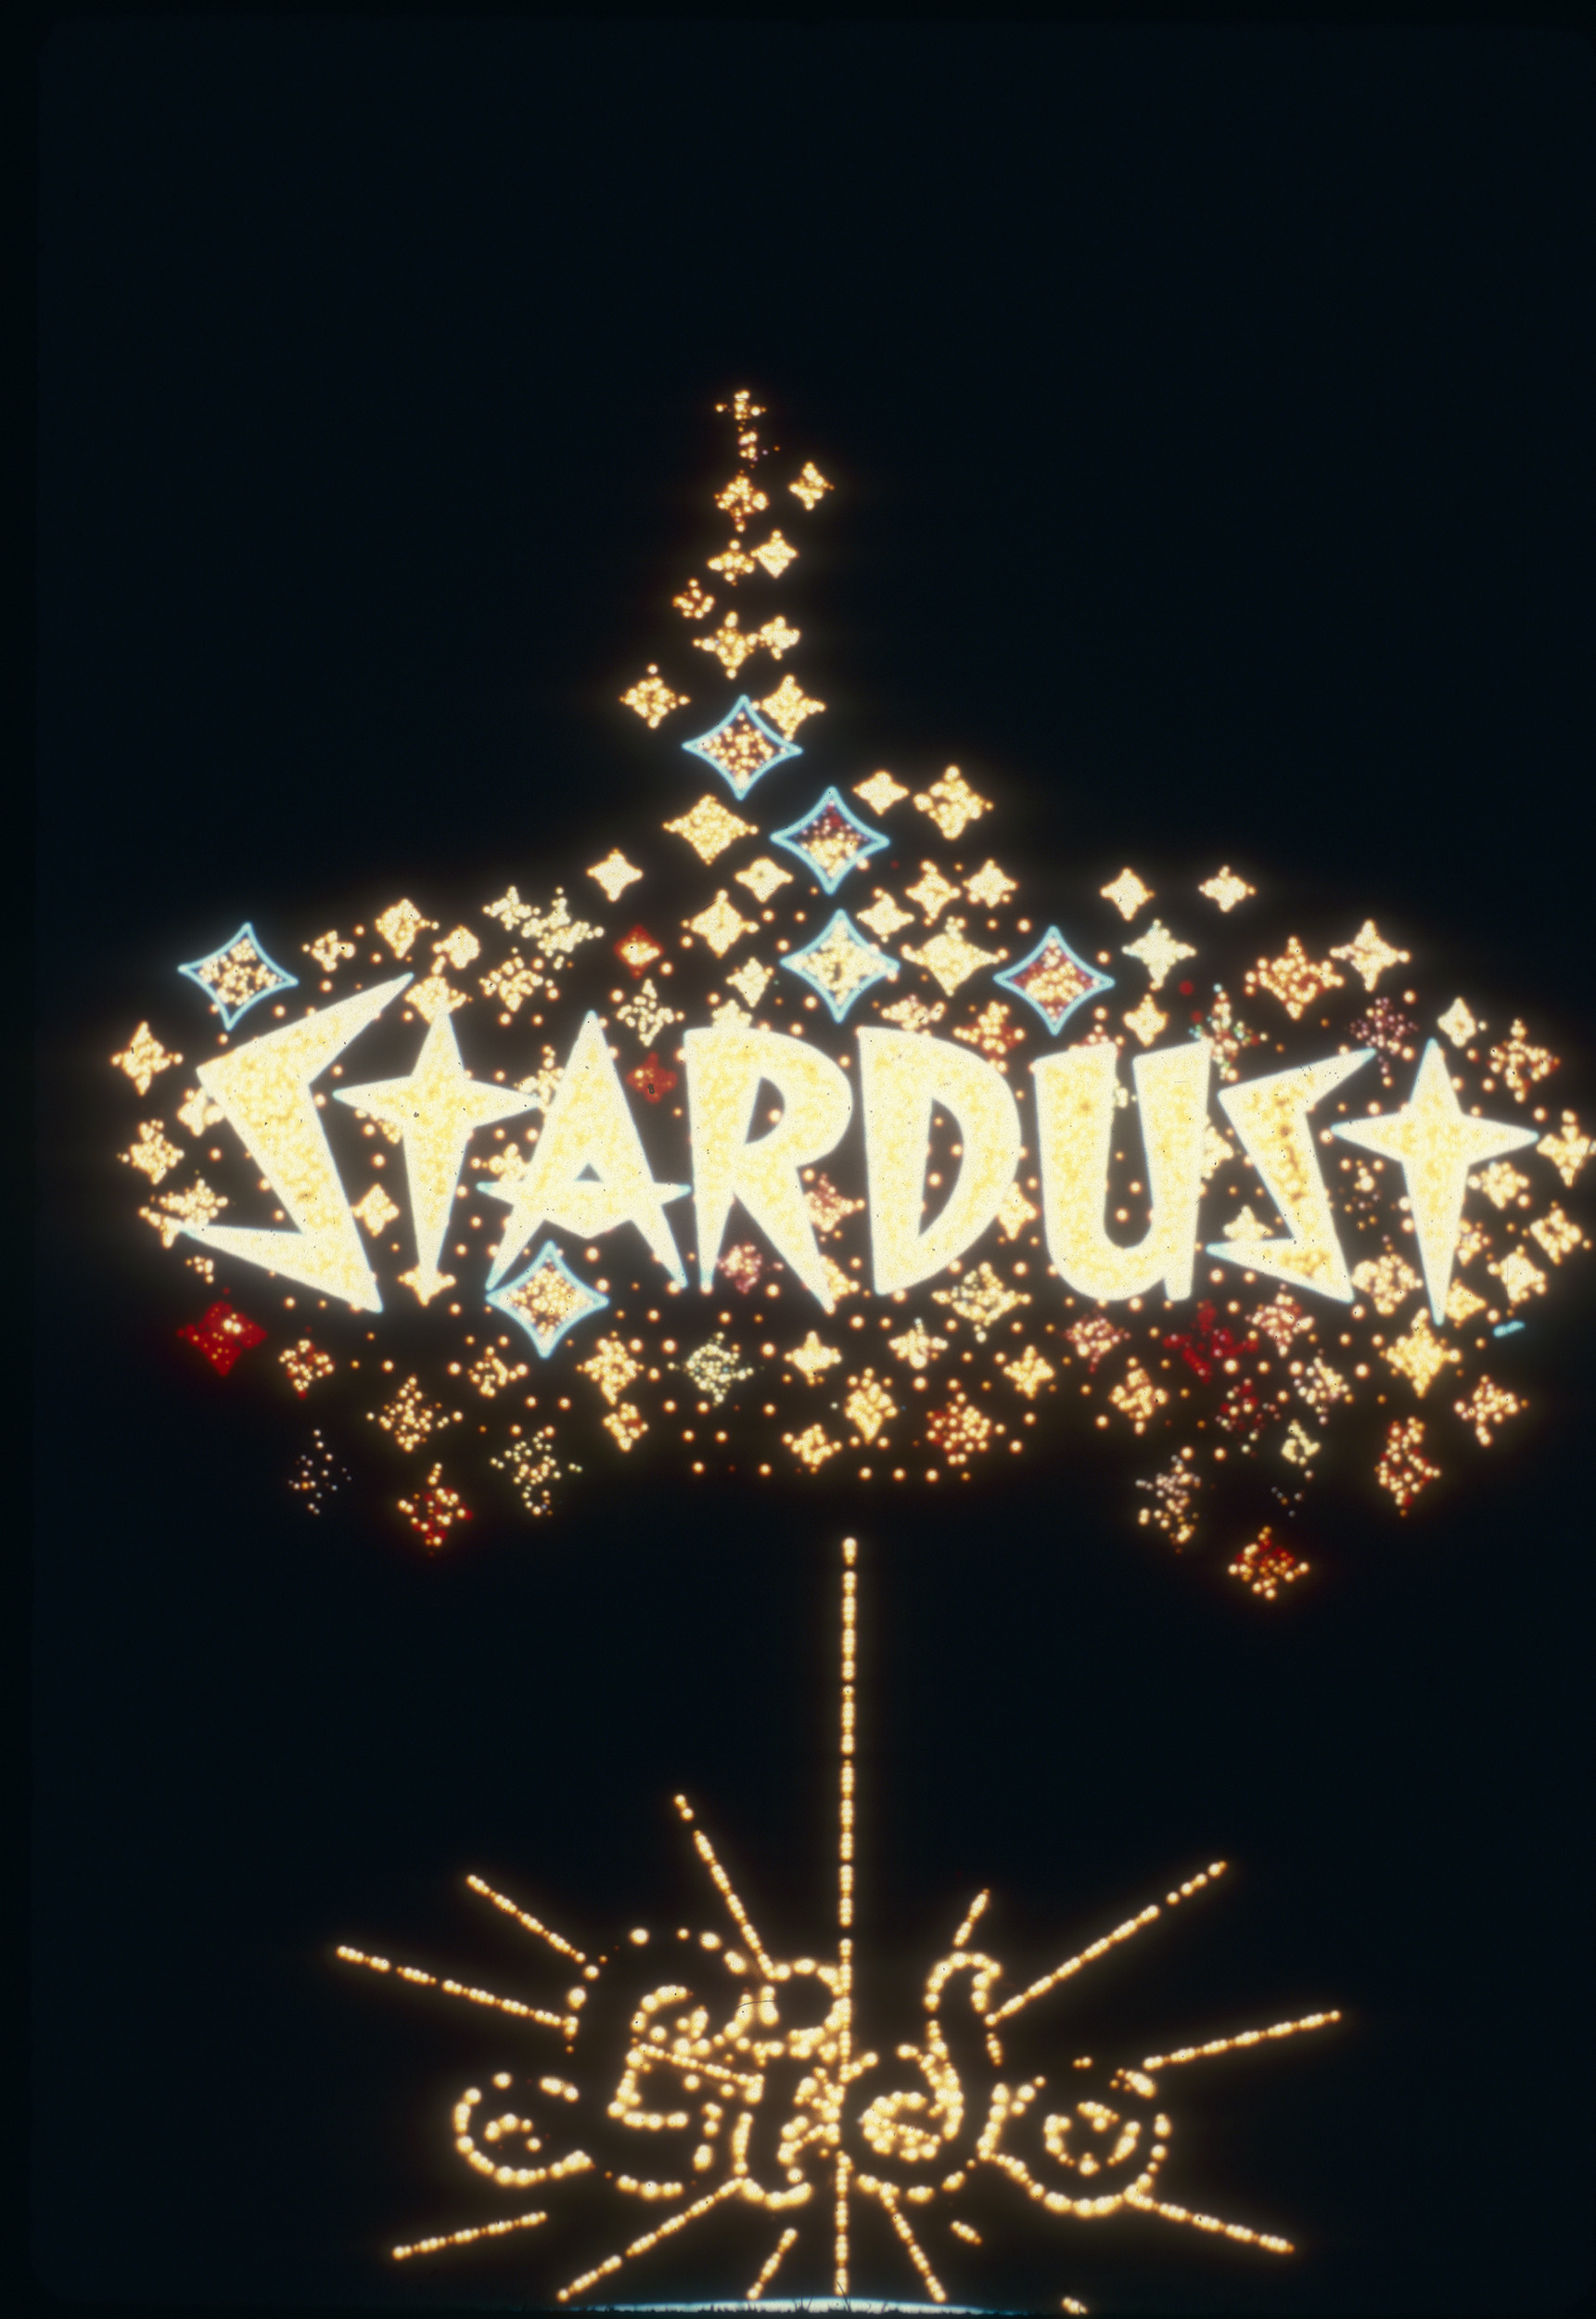 Slide of a neon Stardust marquee, Las Vegas, circa 1980s